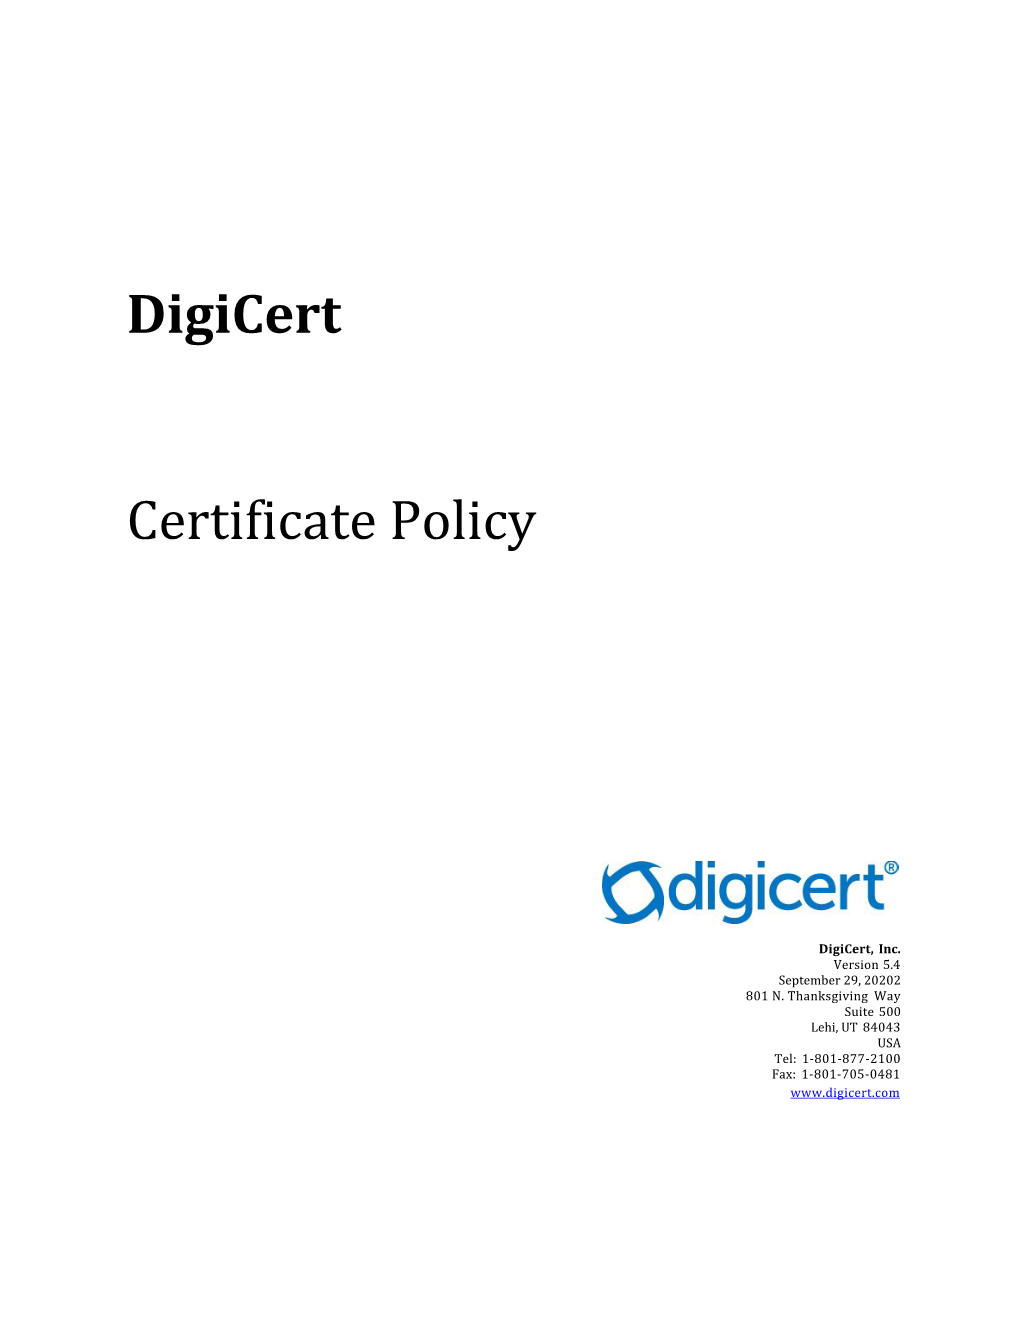 Digicert Certificate Policy V.5.4